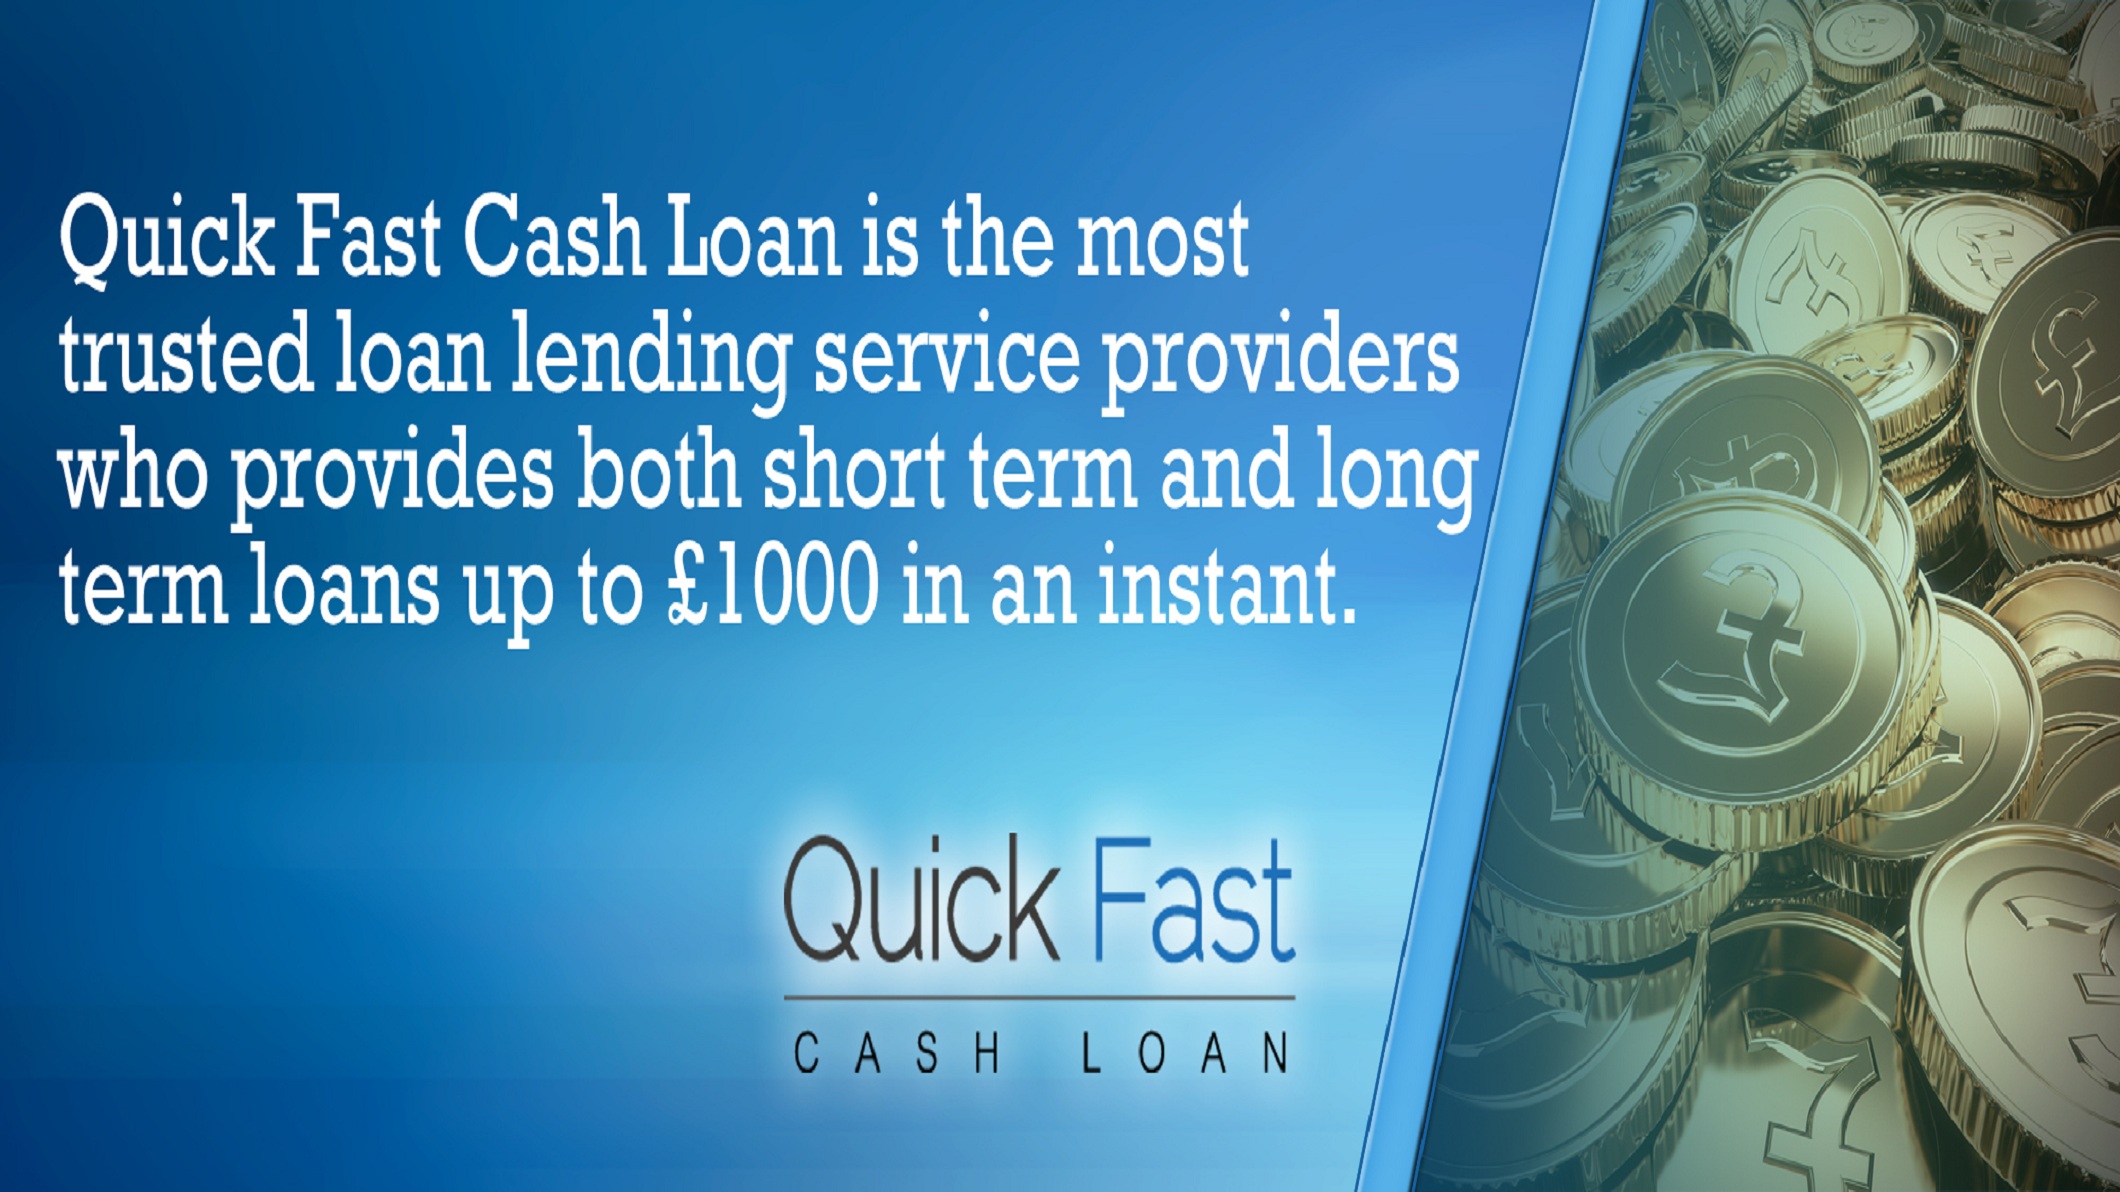 Quick Fast Cash Loan Reviews - 2 Reviews of Quickfastcashloan.co.uk - Sitejabber